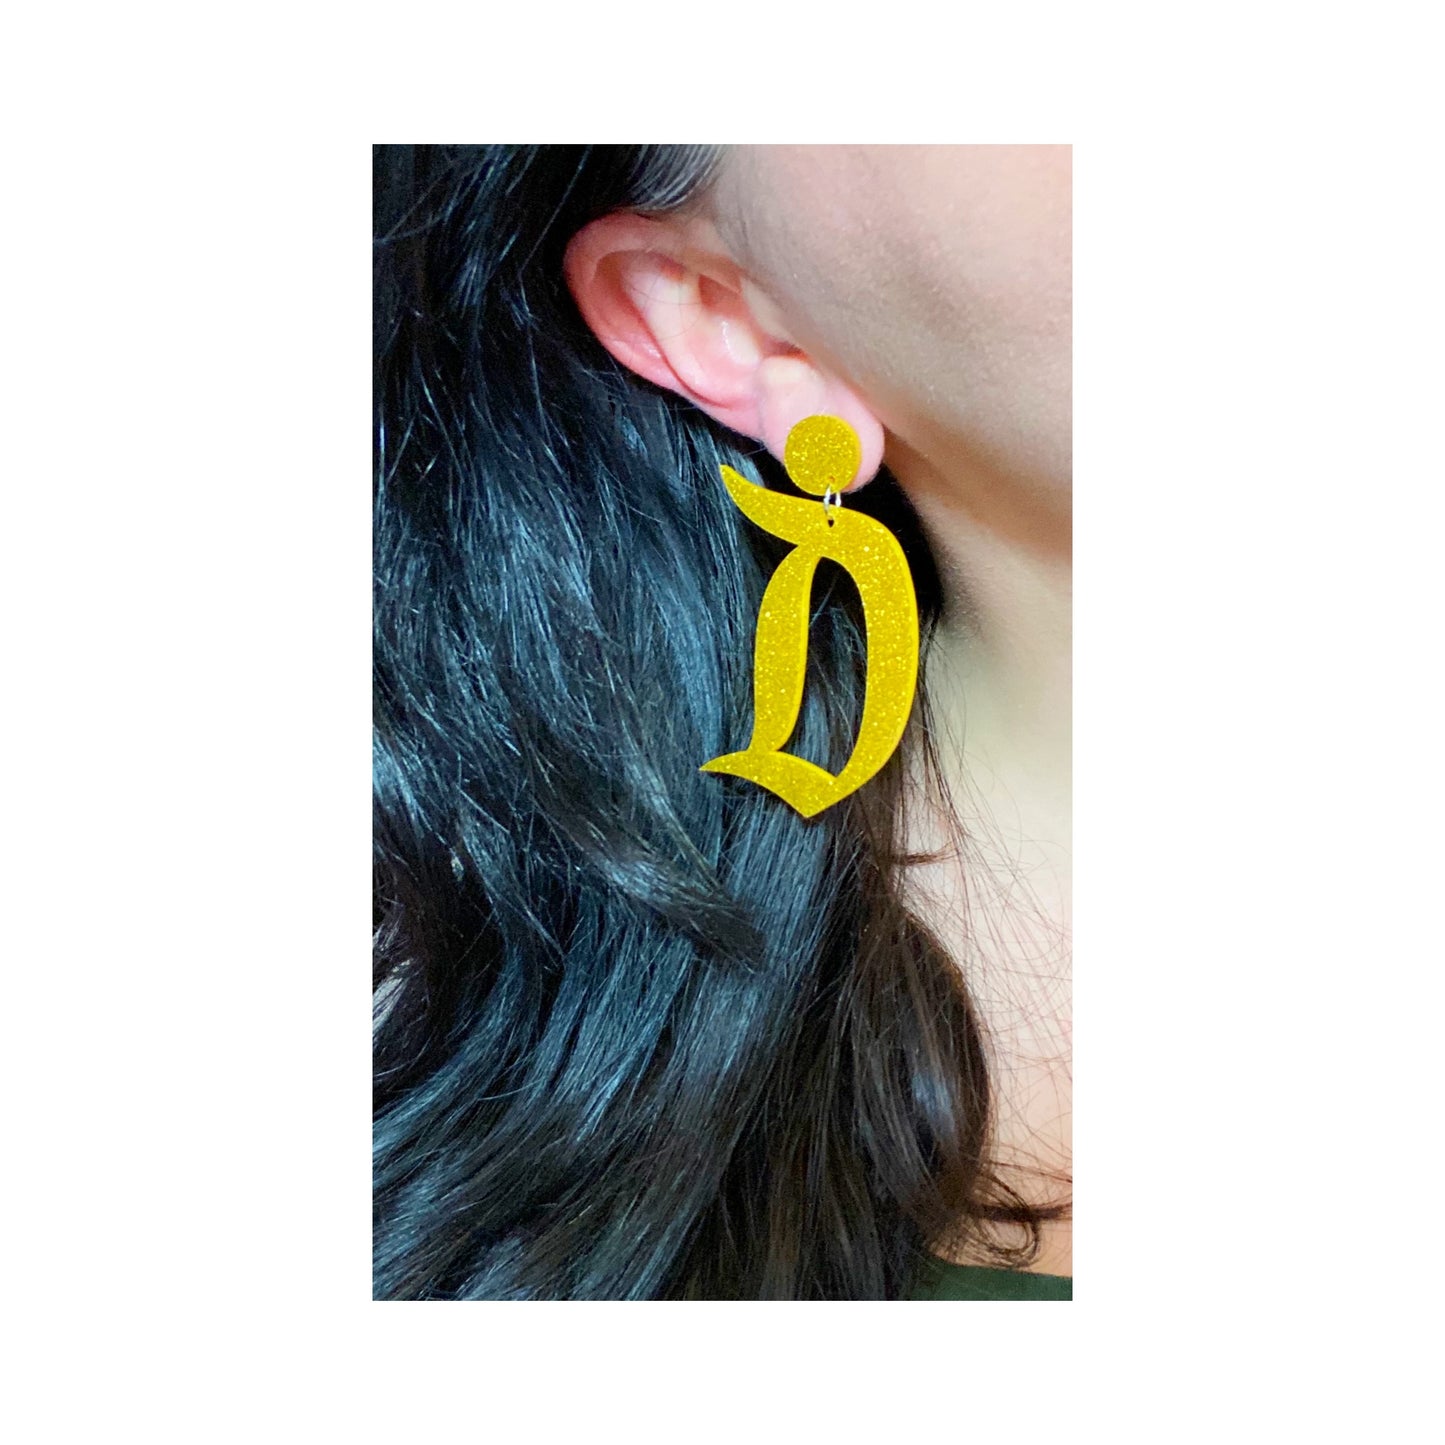 Gold Sparkle Acrylic Retro “D” Drop Earrings